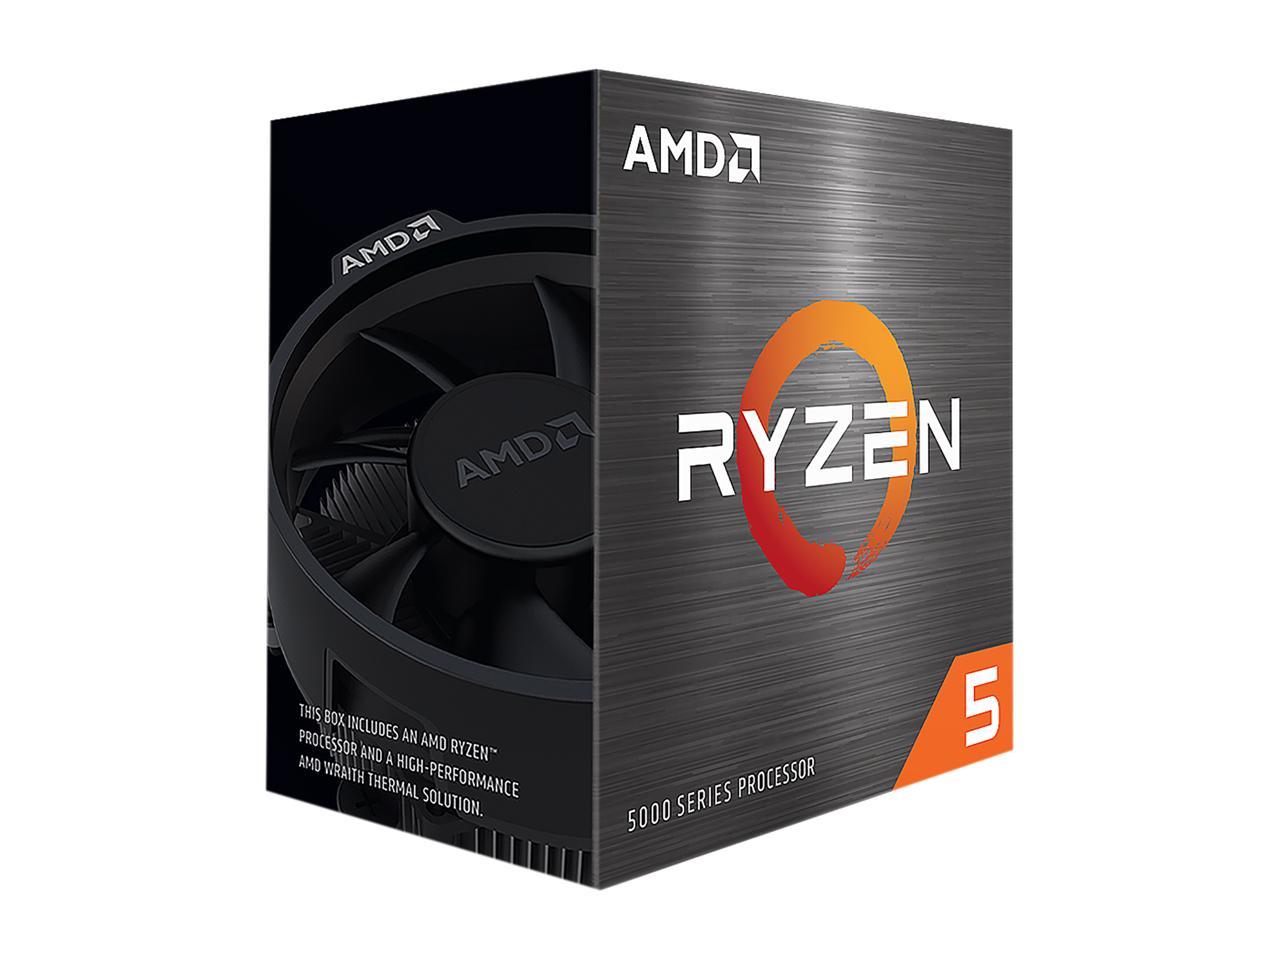 AMD Ryzen 5 5600 + Company of Heroes 3 Game $129.99 at Newegg